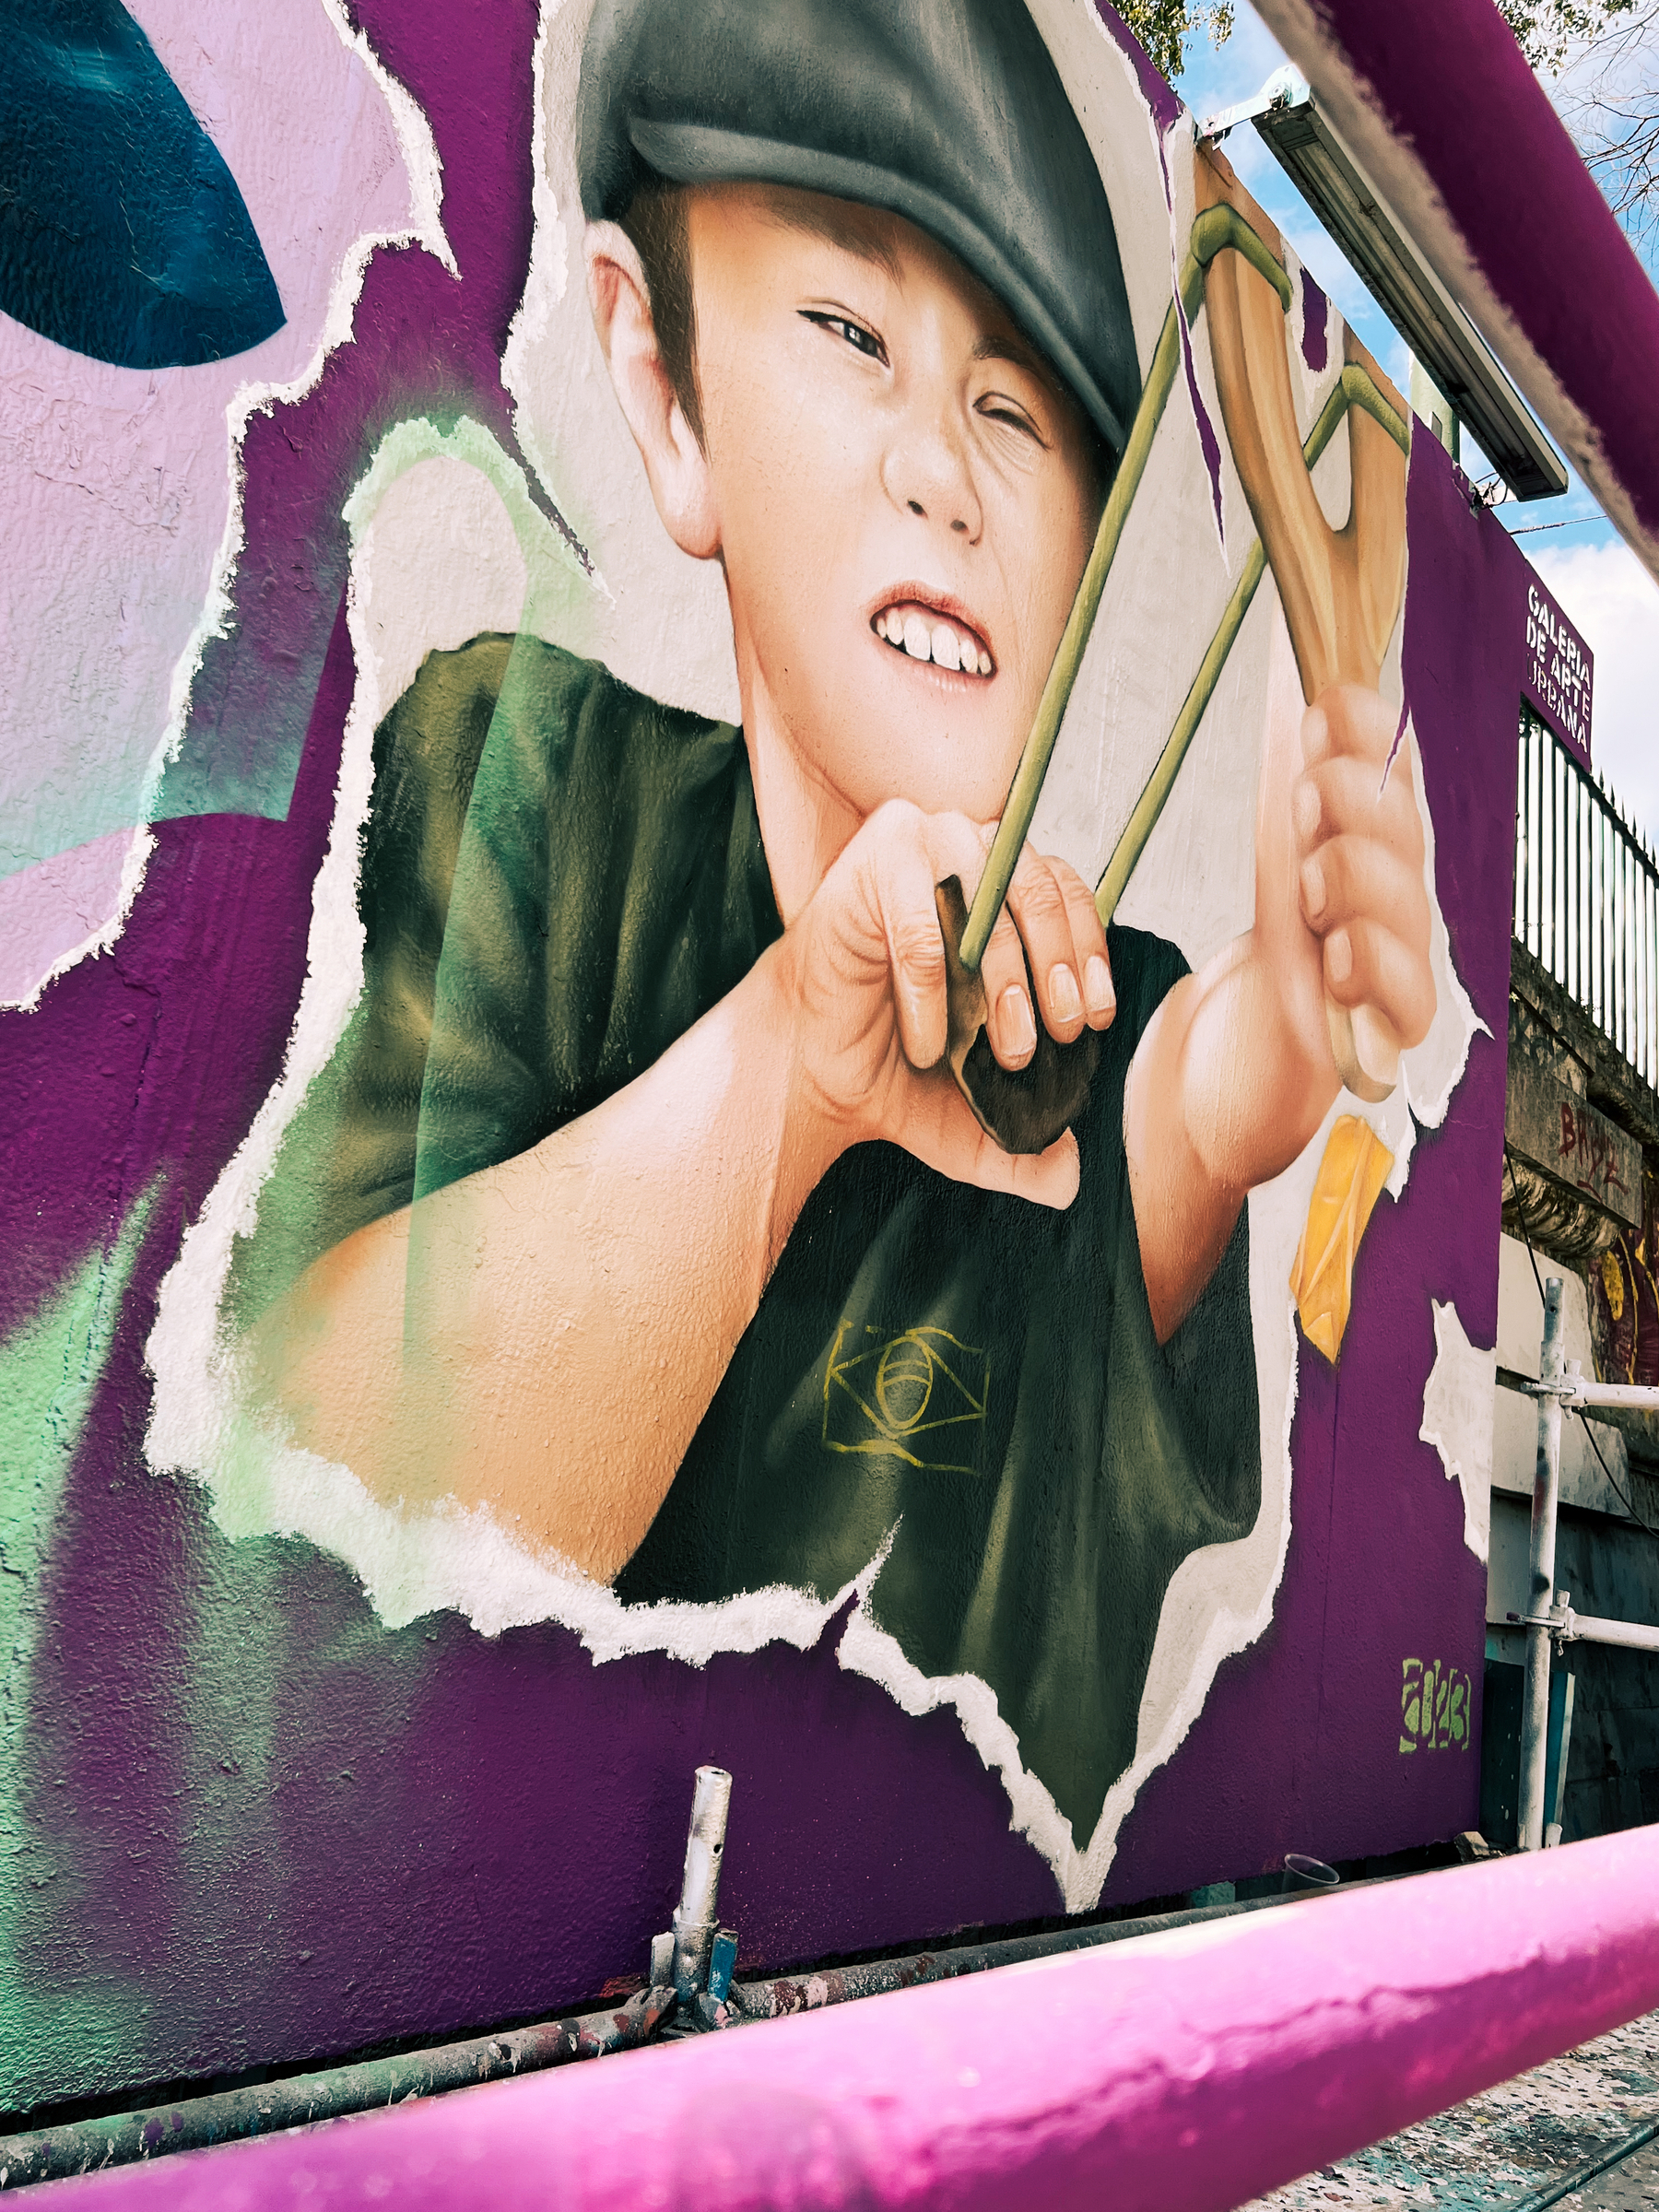 Graffiti of a kid holding a slingshot. 